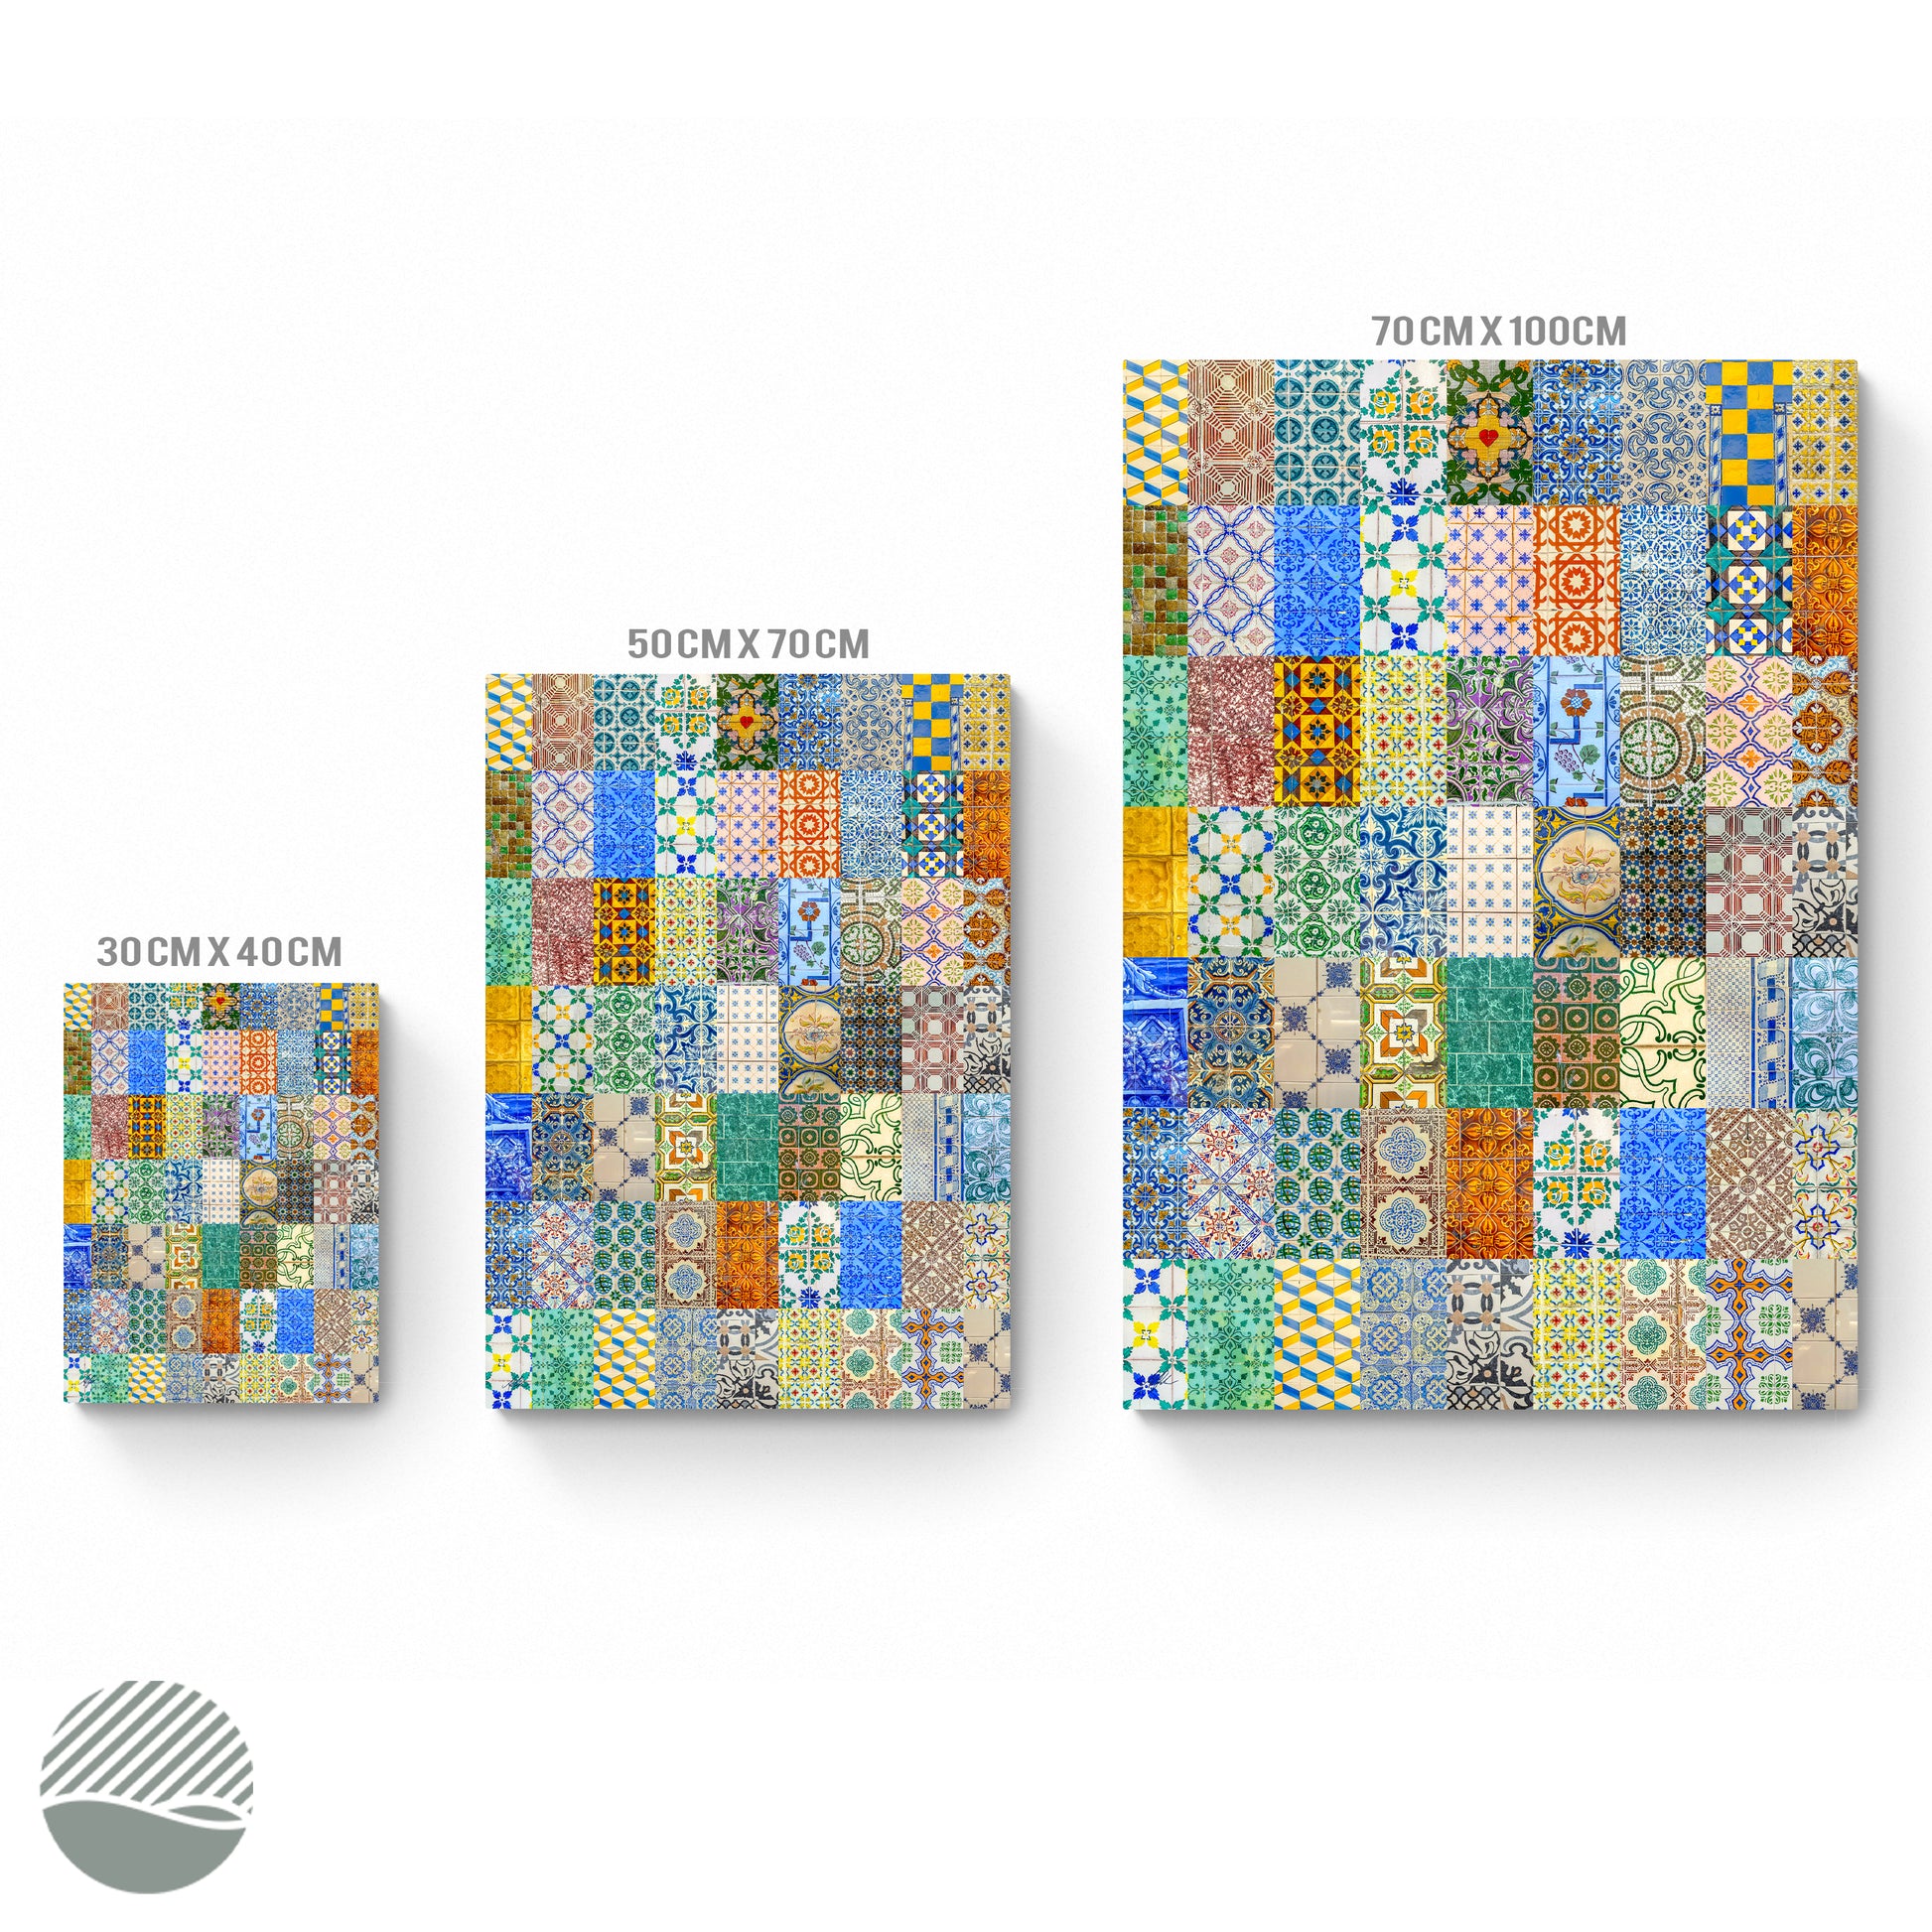 Tiles of Lisboa by Alantherock sizes